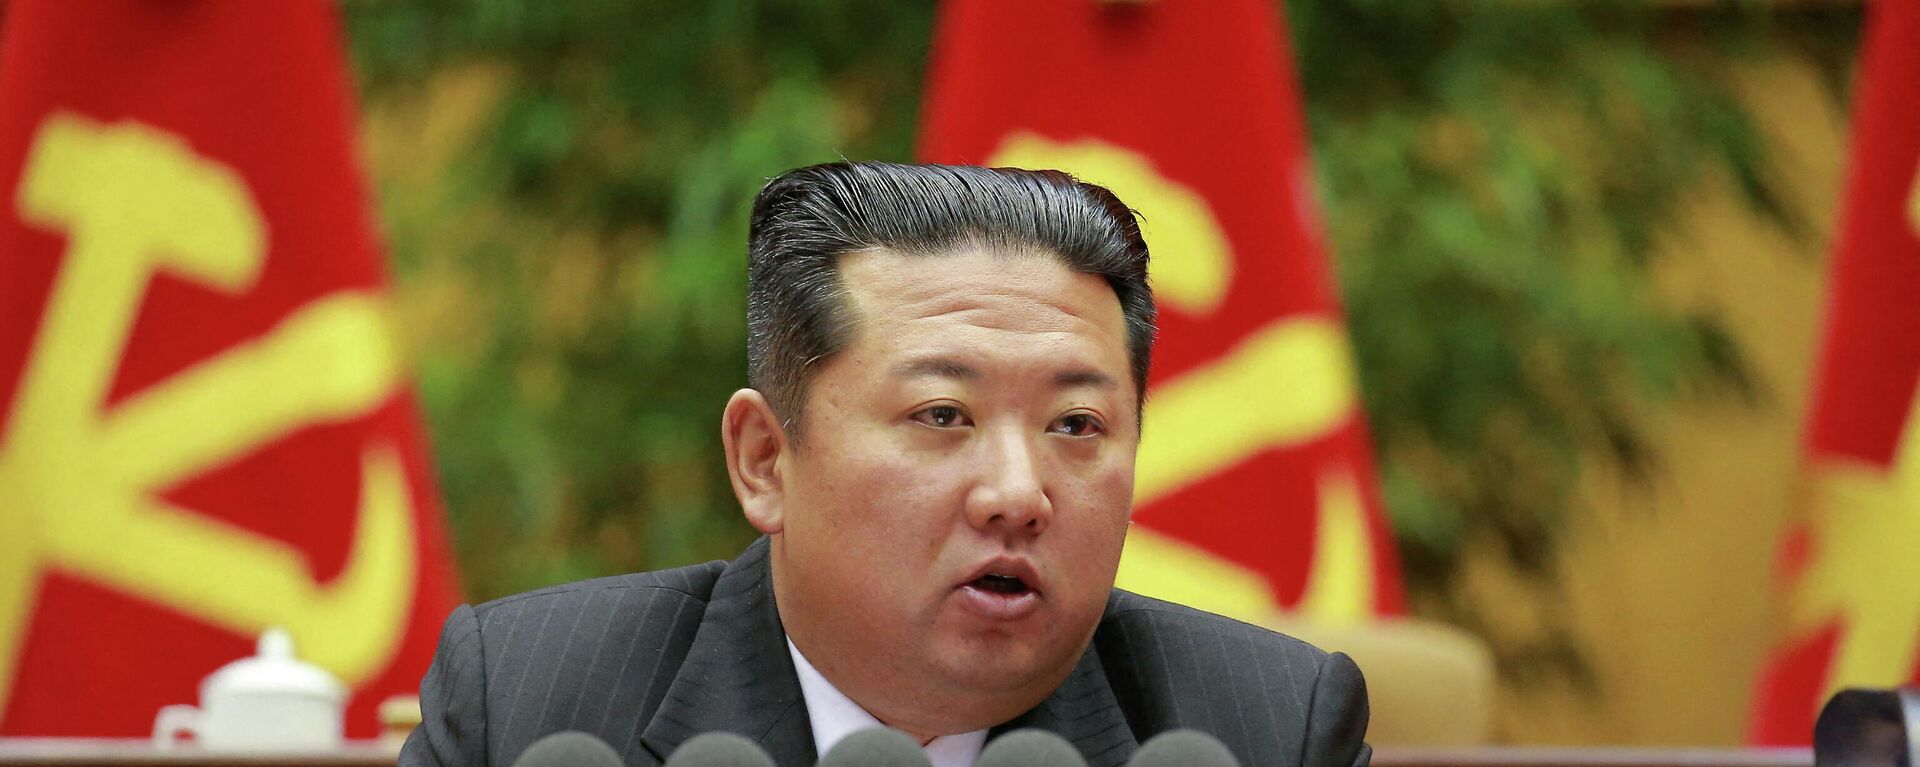 Kim Joun-un, el líder norcoreano - Sputnik Mundo, 1920, 22.03.2022